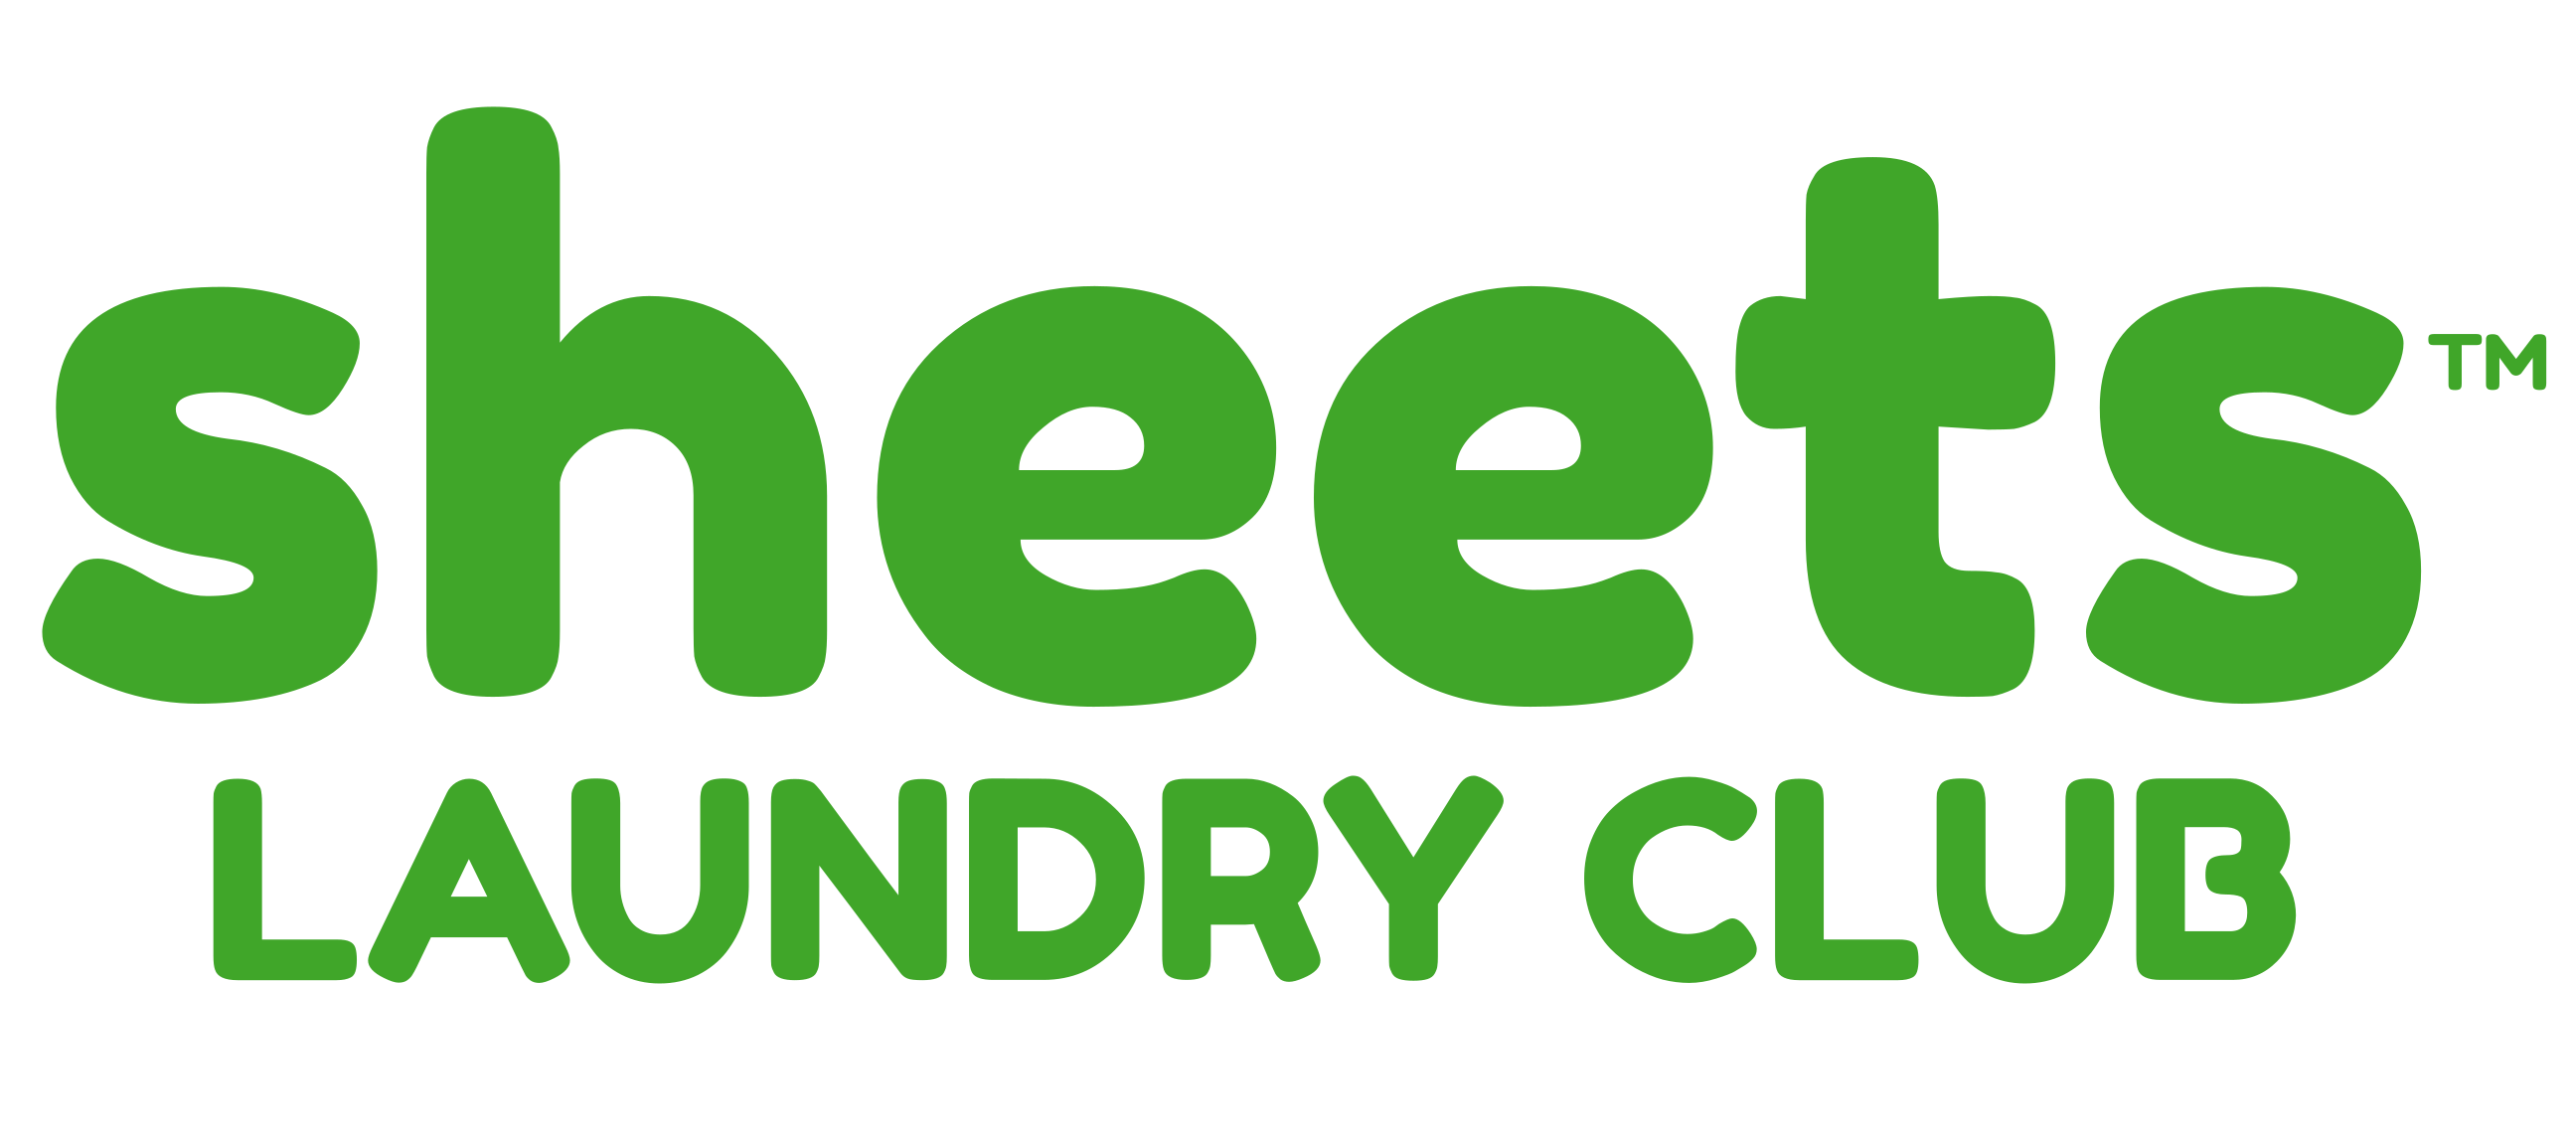 sheets-laundry-club-pro logo